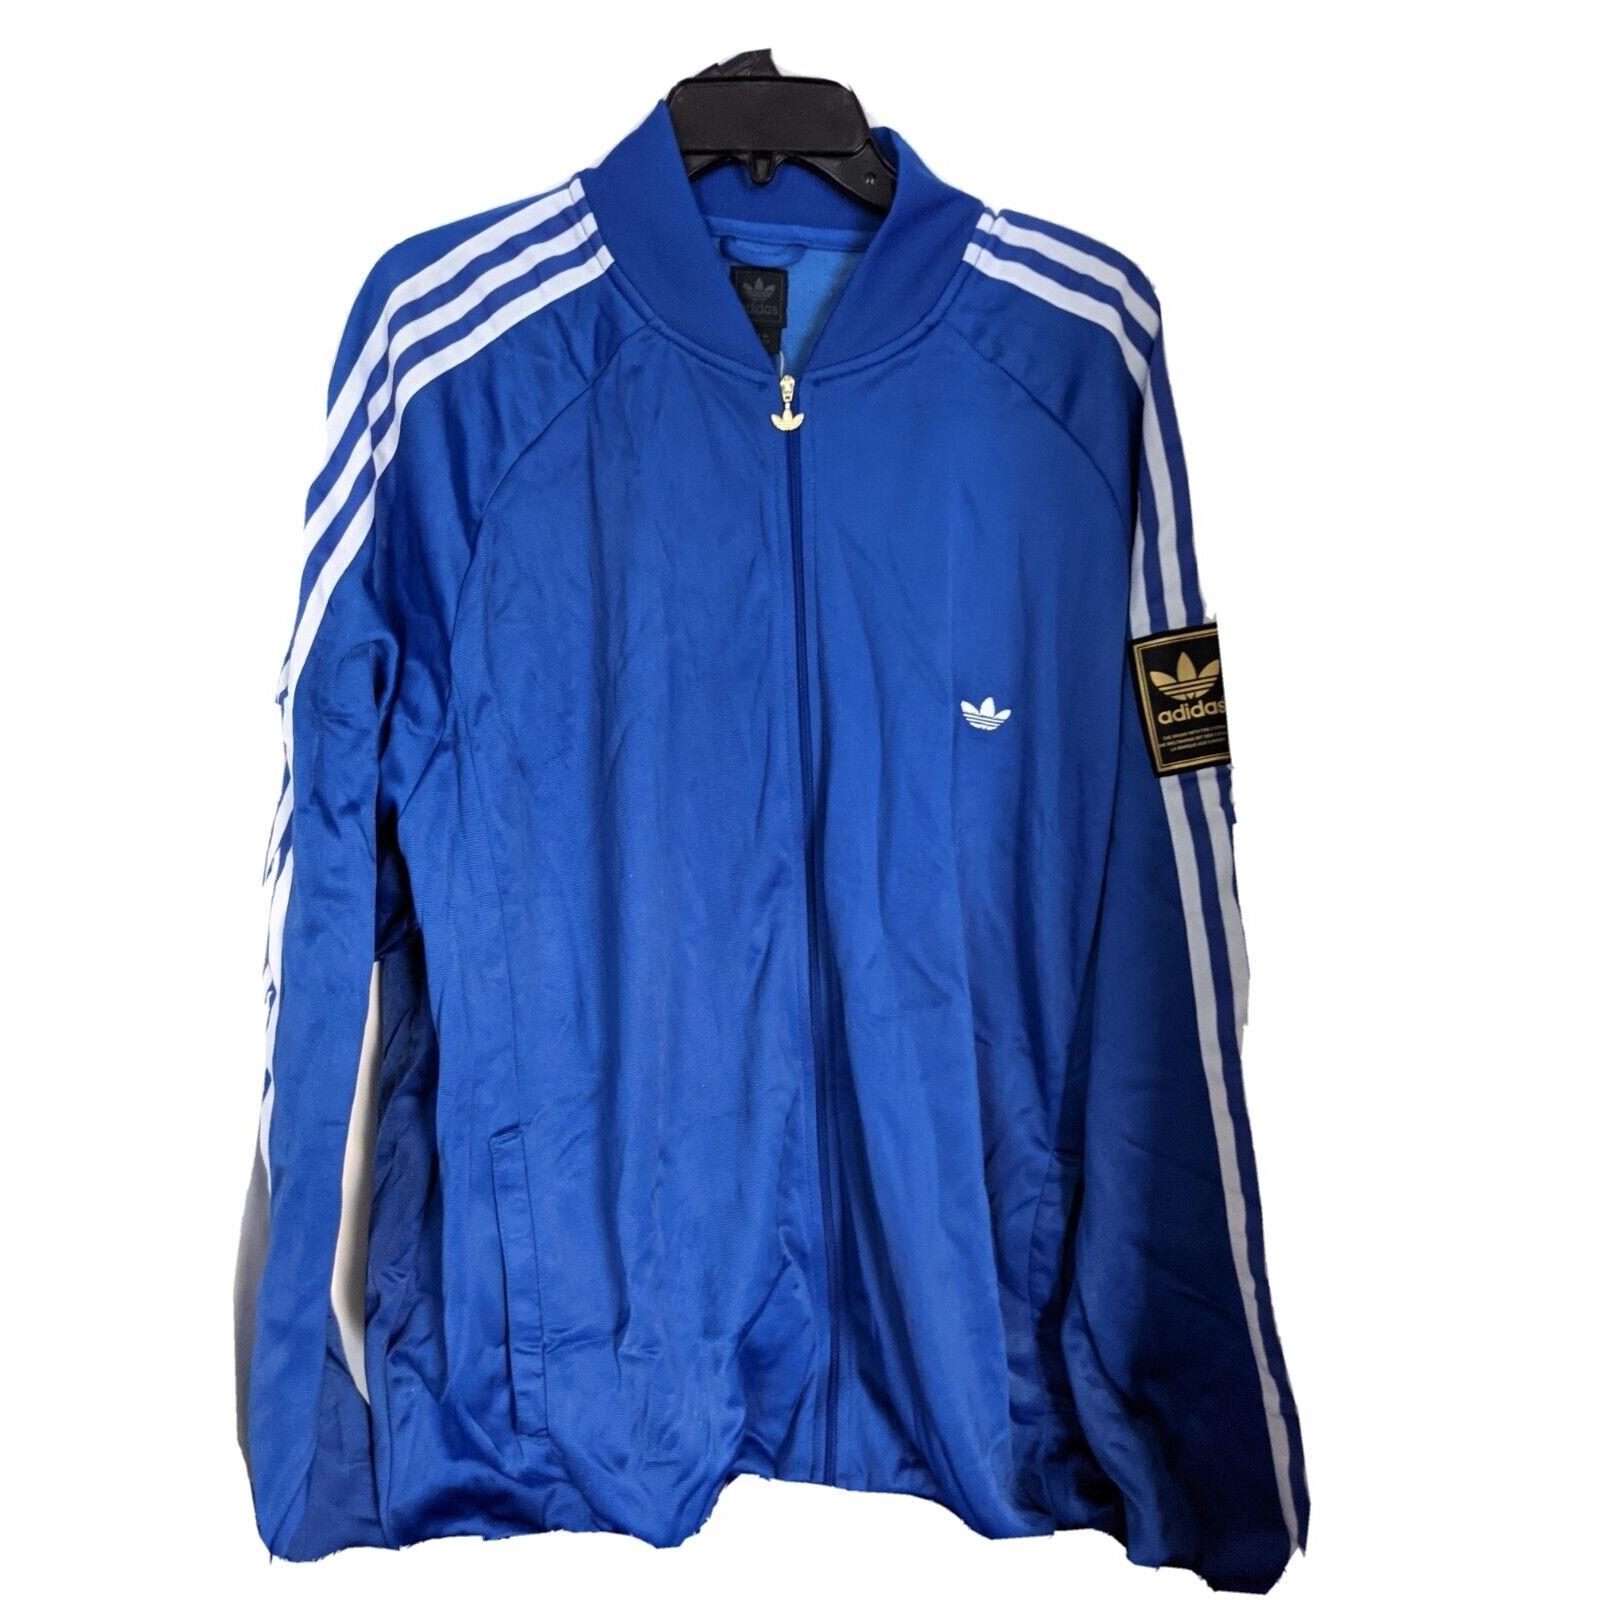 2005 Adidas Originals Label Usa Trefoil 3-Stripes Royal Track Jacket sz XL